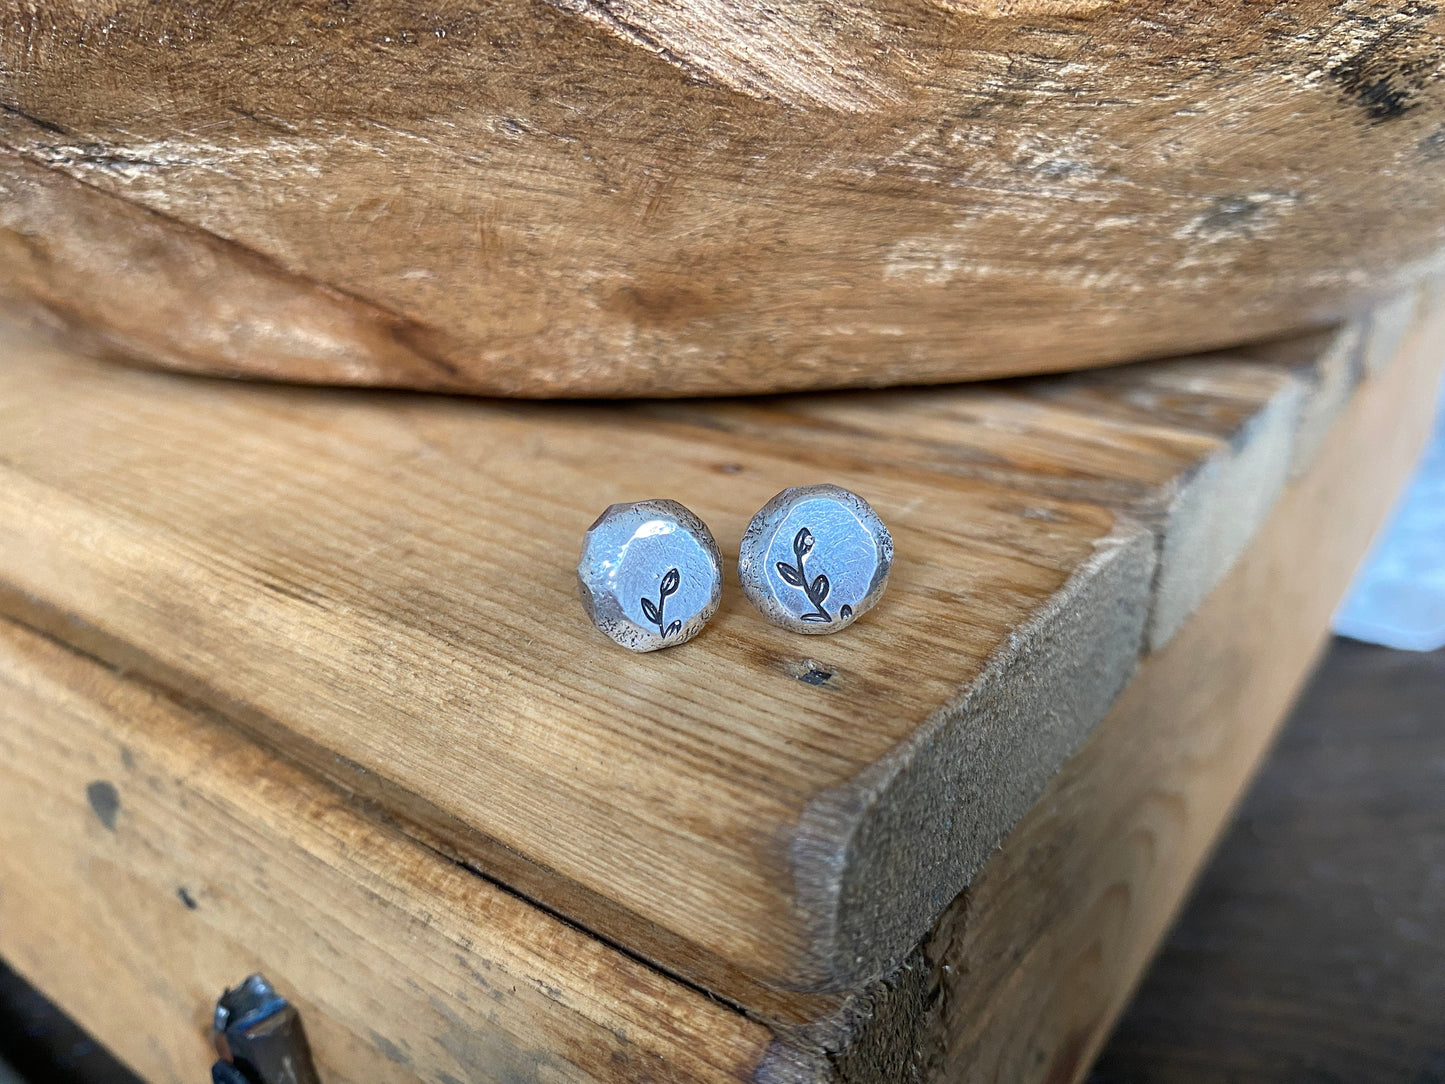 nugget earrings, recycled silver earrings, hand stamped earrings, sterling silver earring posts, nugget post earrings, horticulture earrings